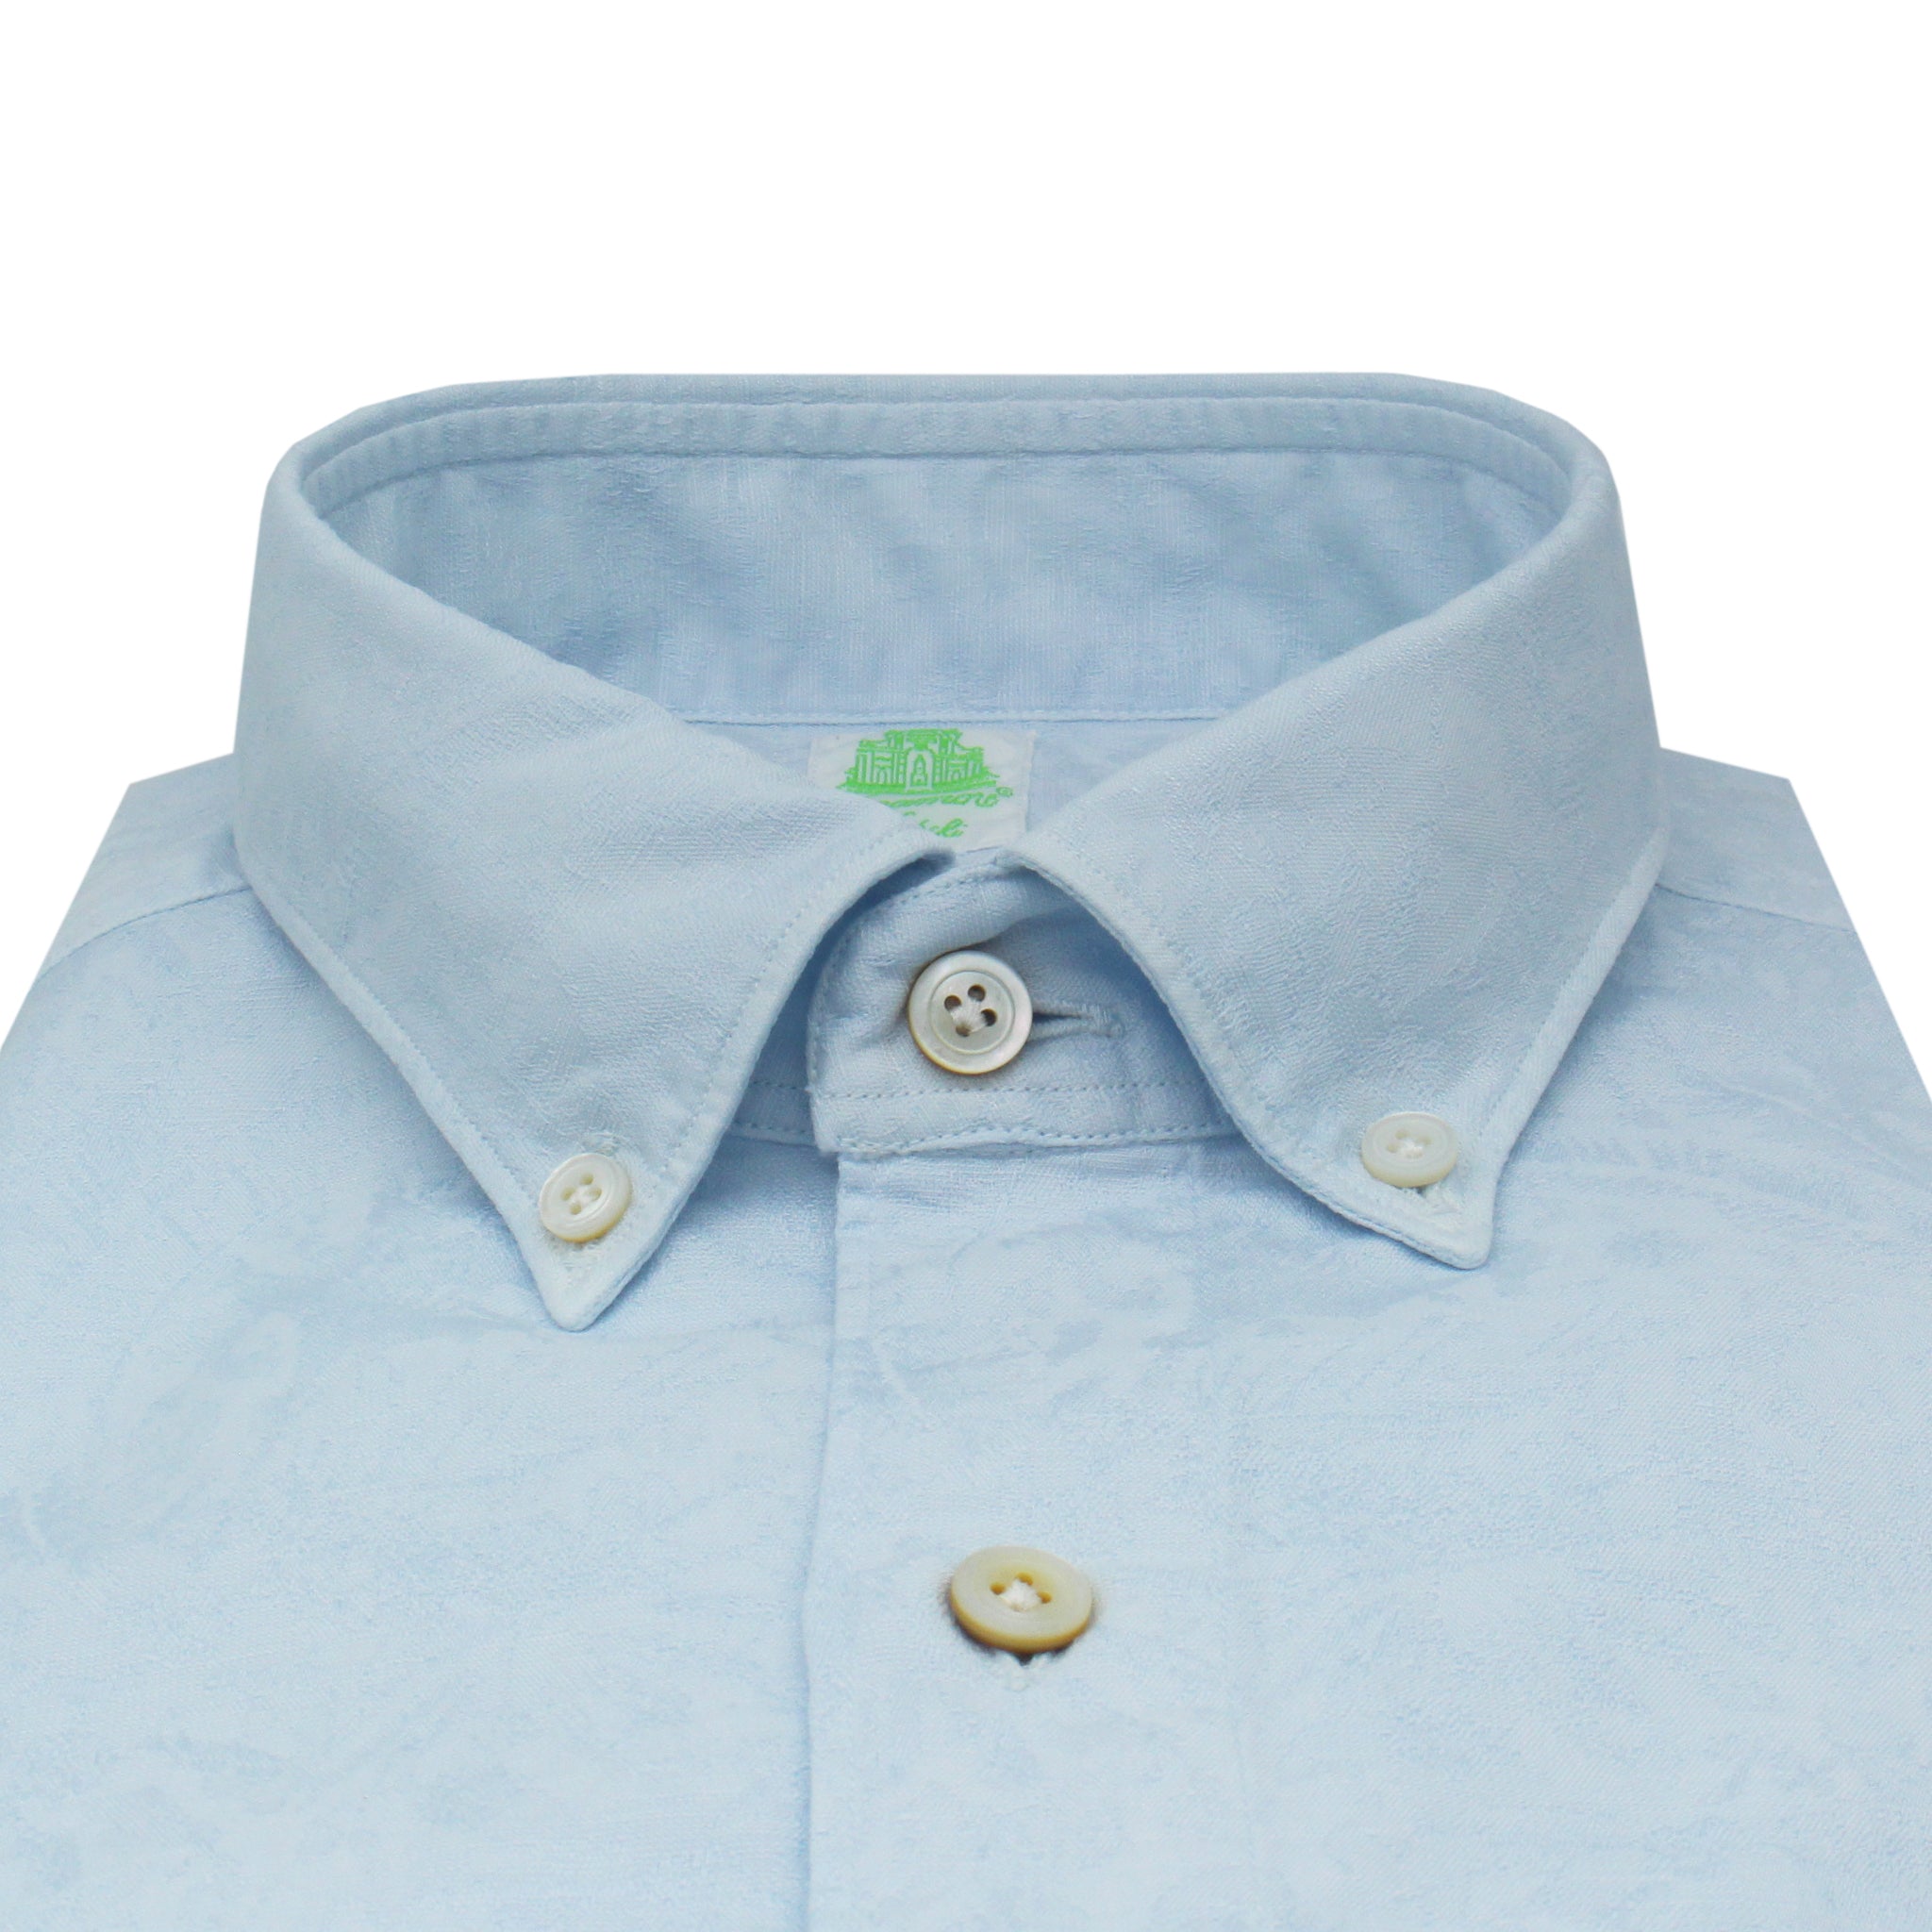 Tokyo cotton and linen jacquard garment dyed slim shirt